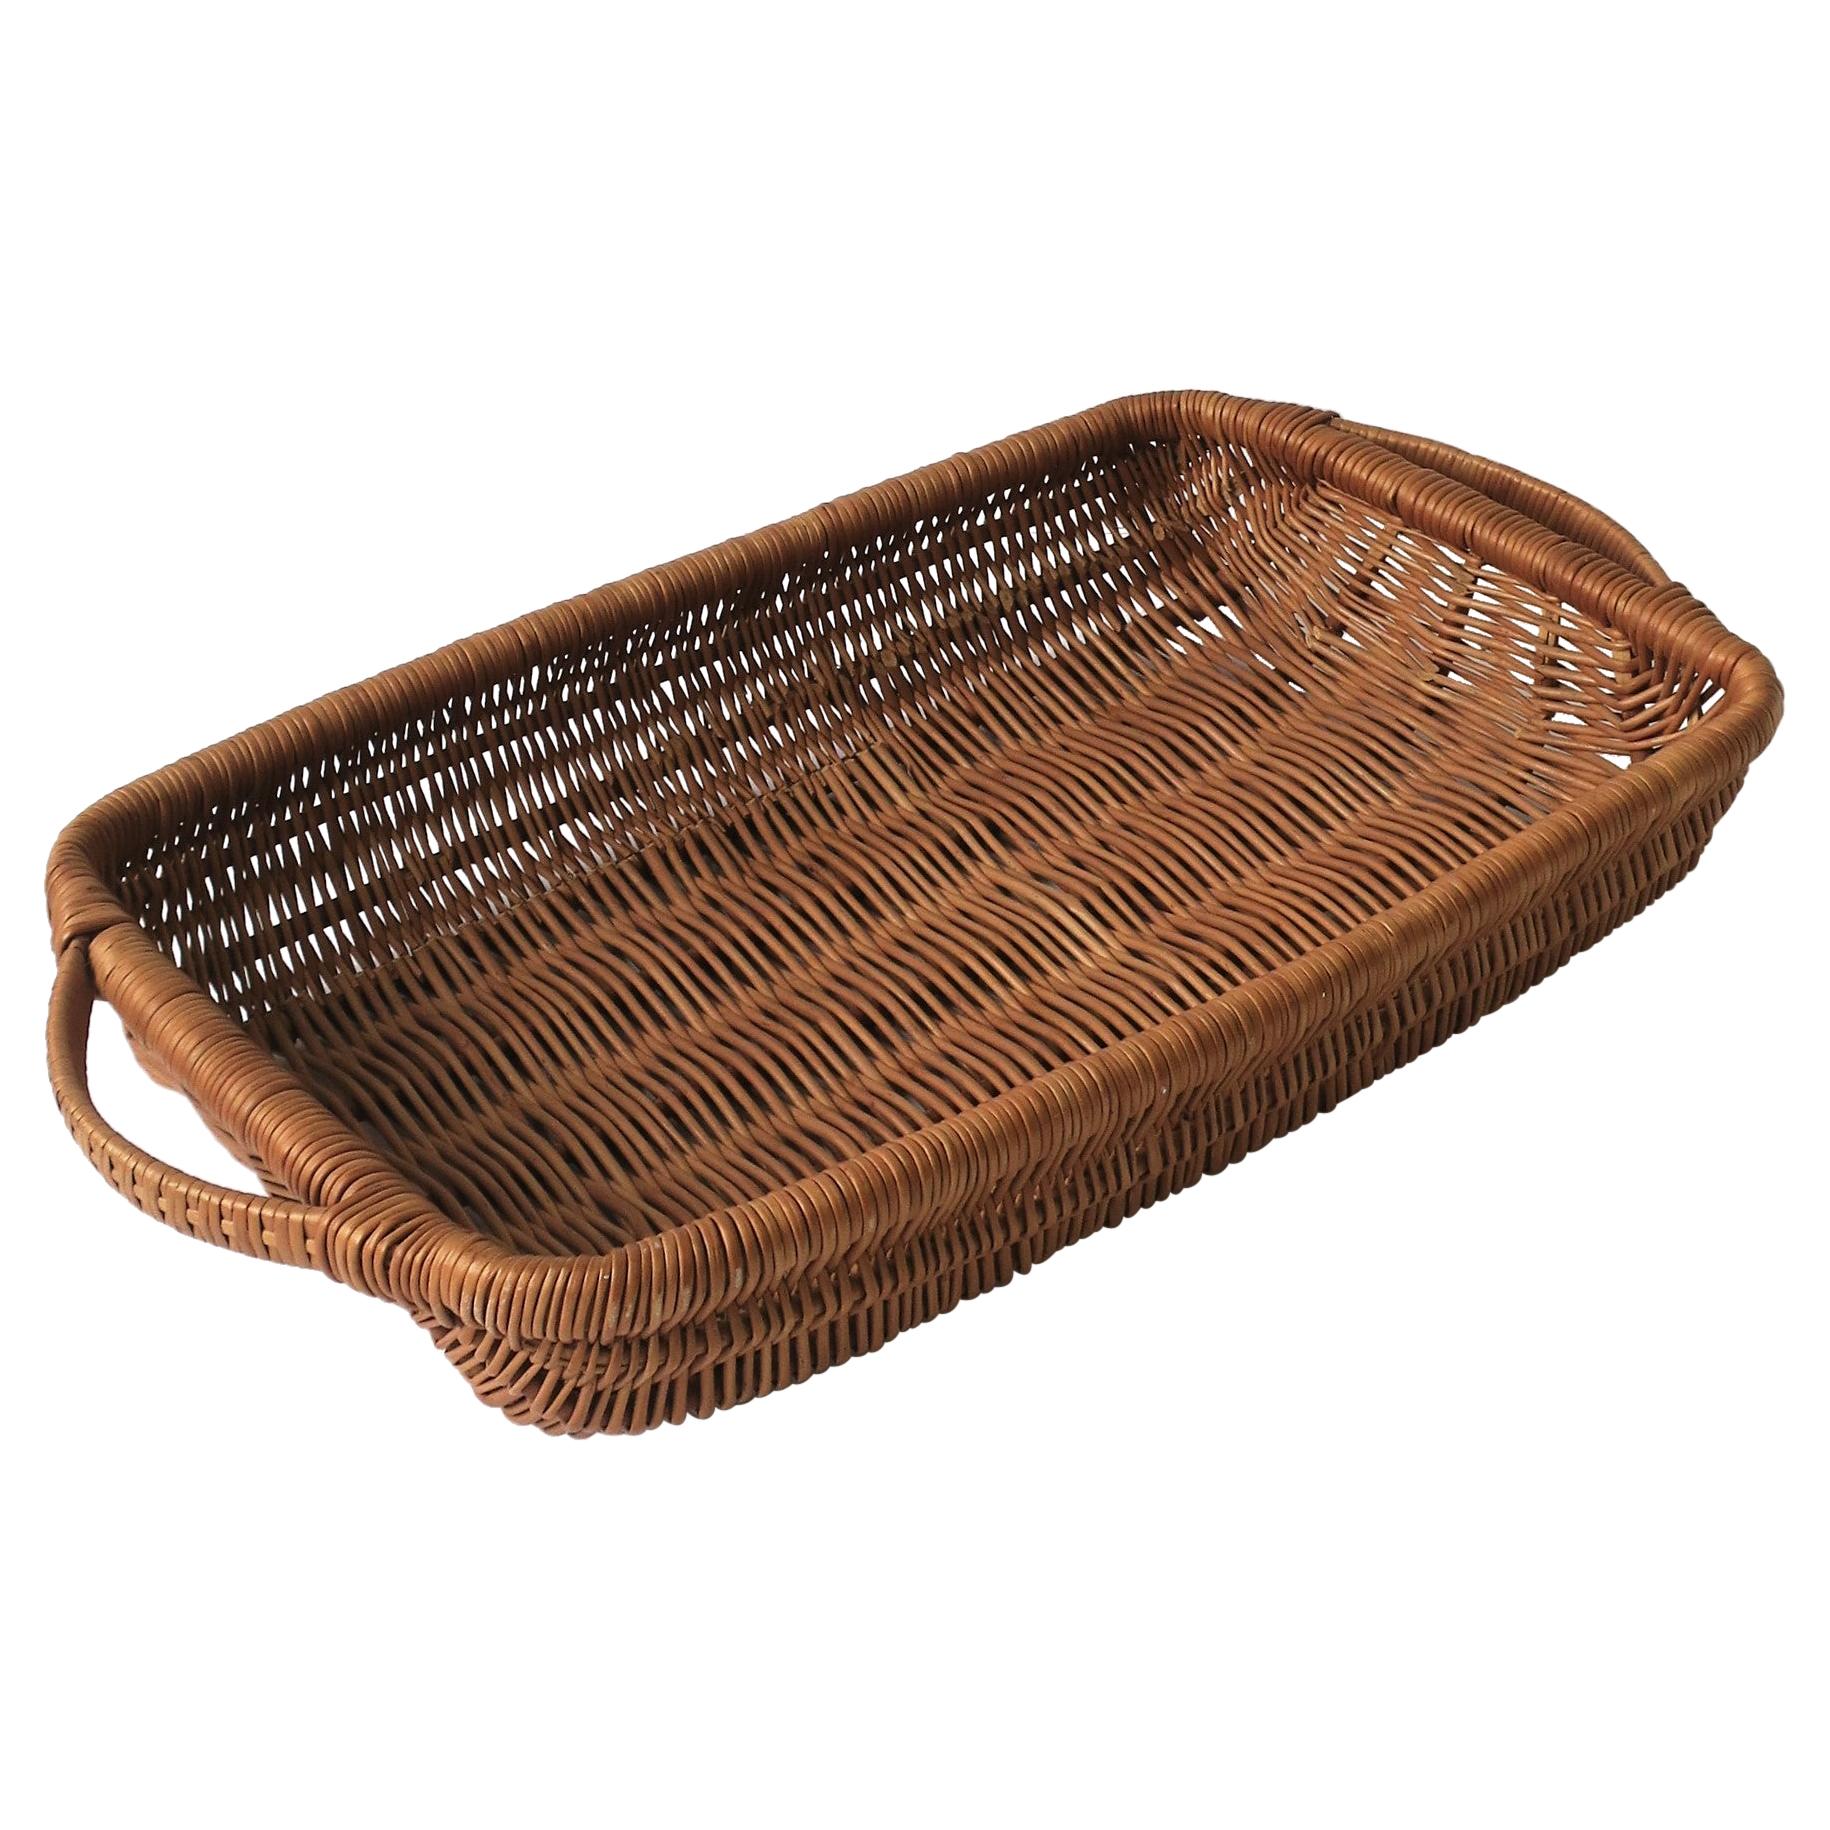 Wicker Serving Tray or Gathering Basket